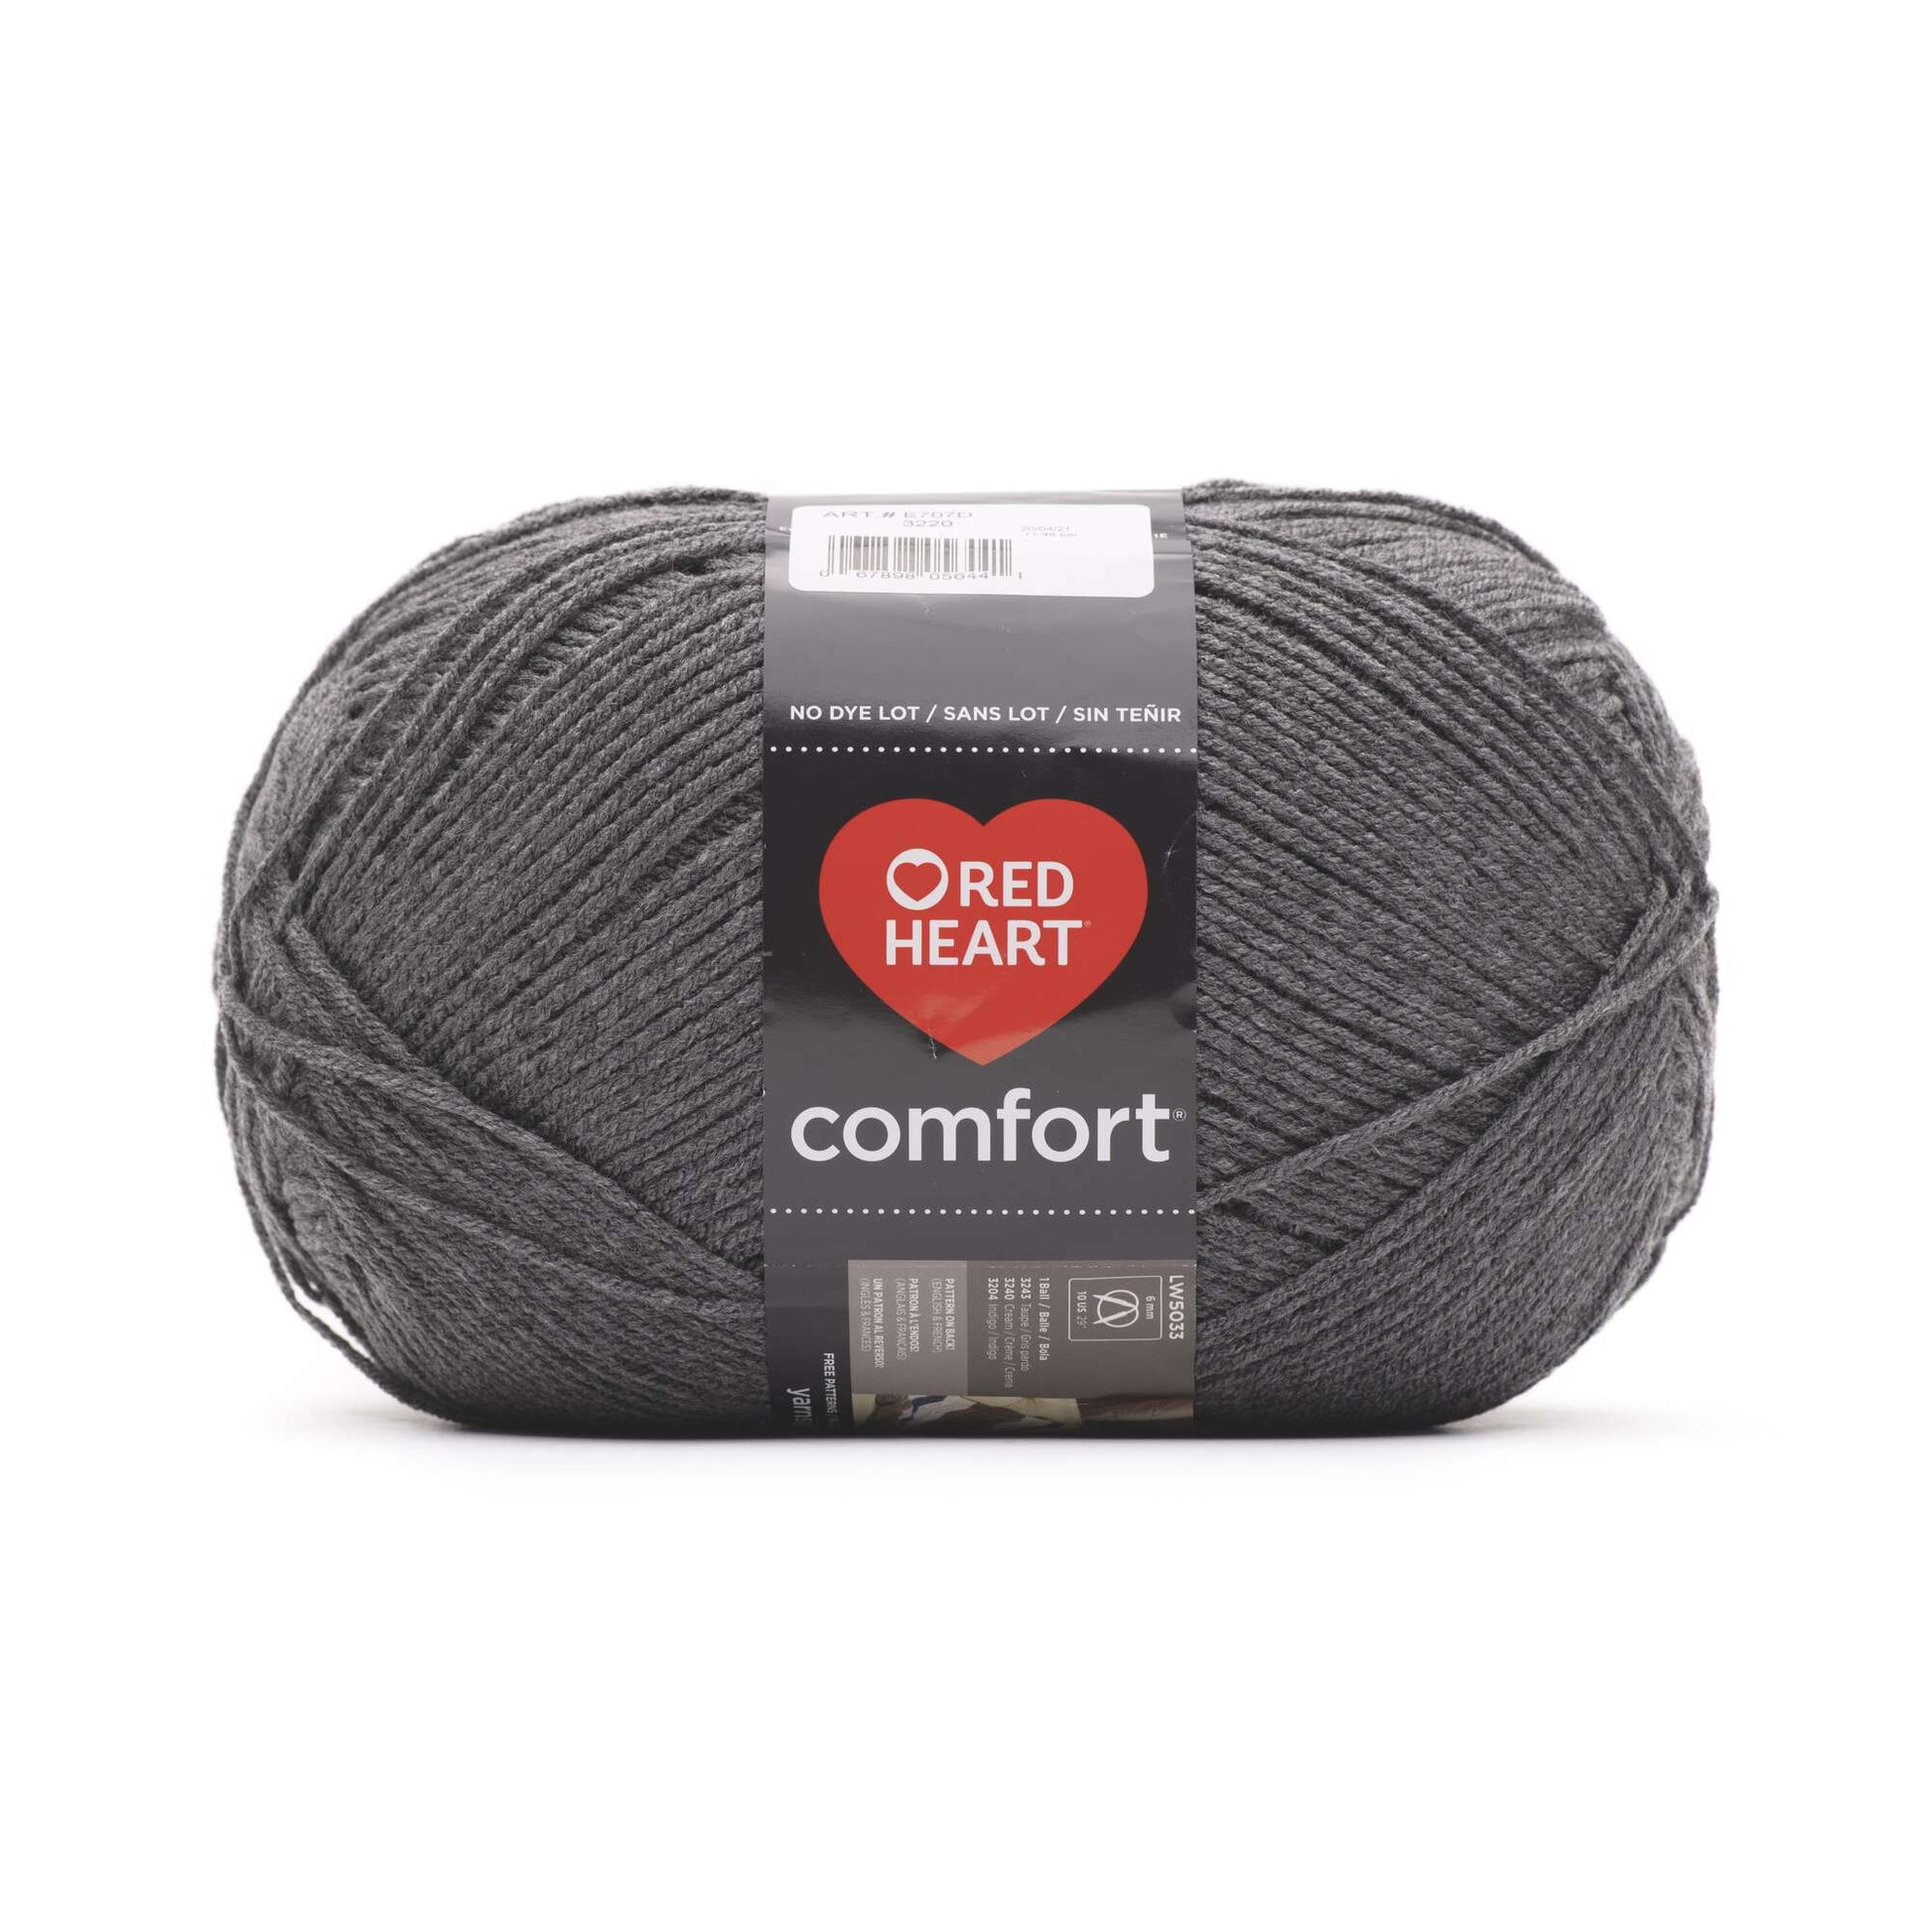 Red Heart Black Marl Comfort Yarn (4 - Medium), Free Shipping at